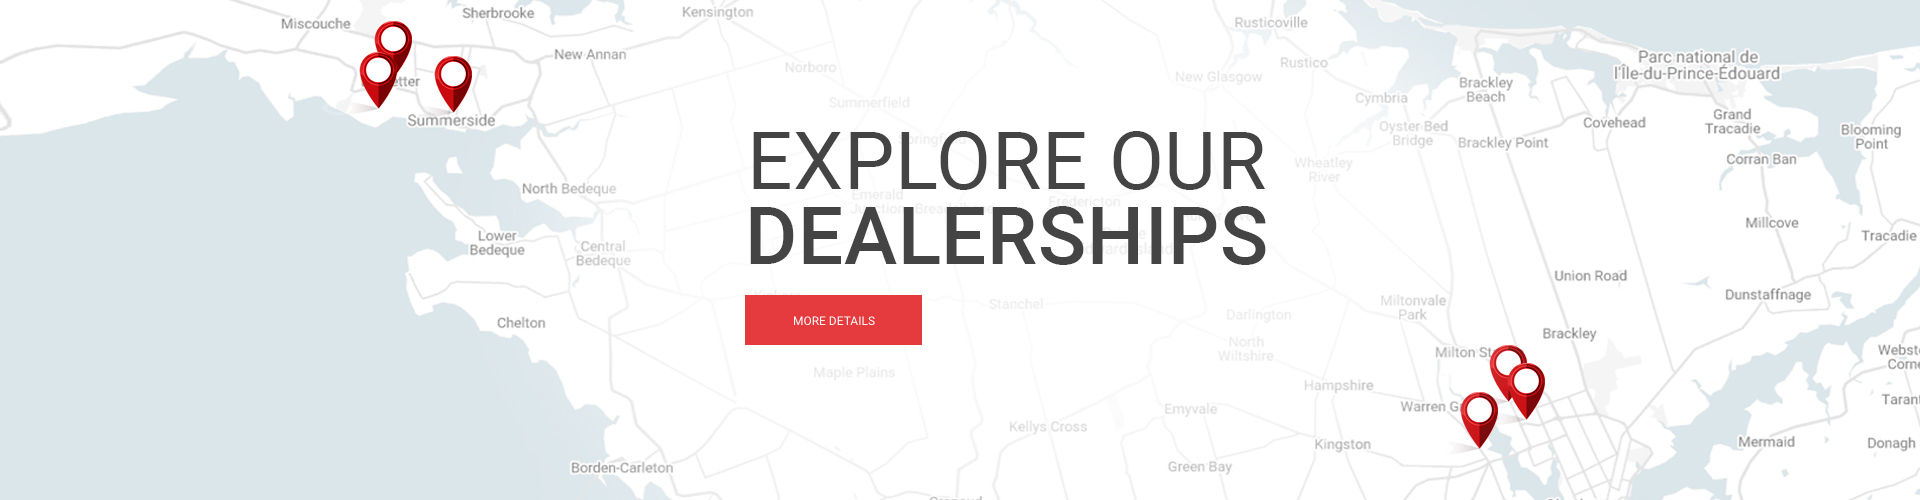 Explore our dealerships